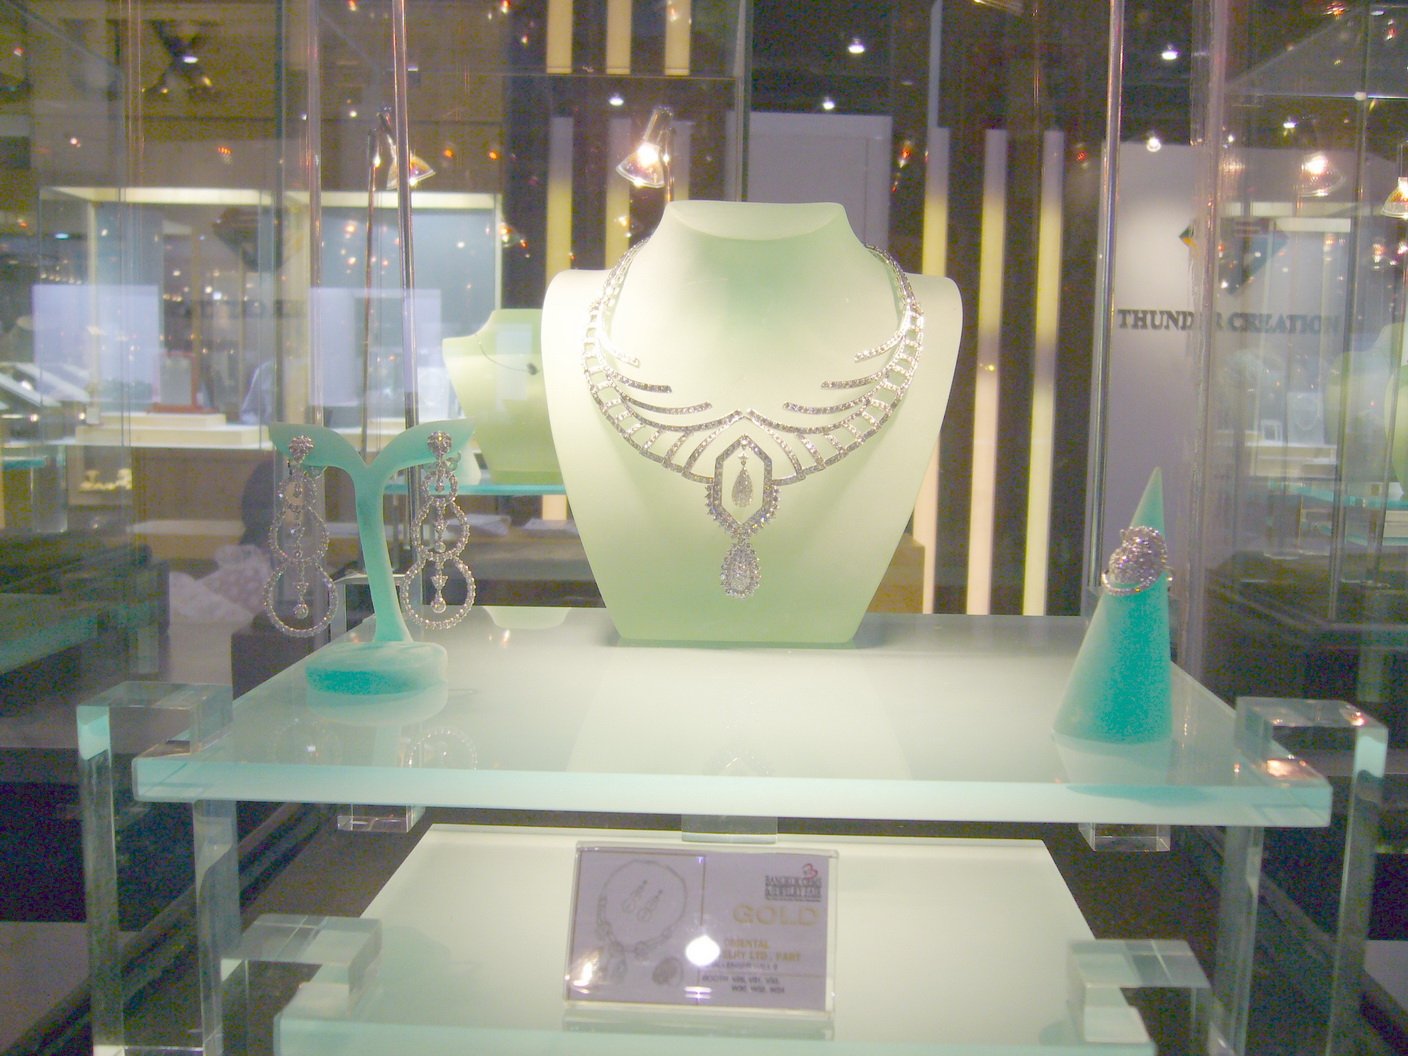 Hot 2007 Jewelry Design Award in Bangkok Gems & Jewelry Fair by L.S. Jewelry Group